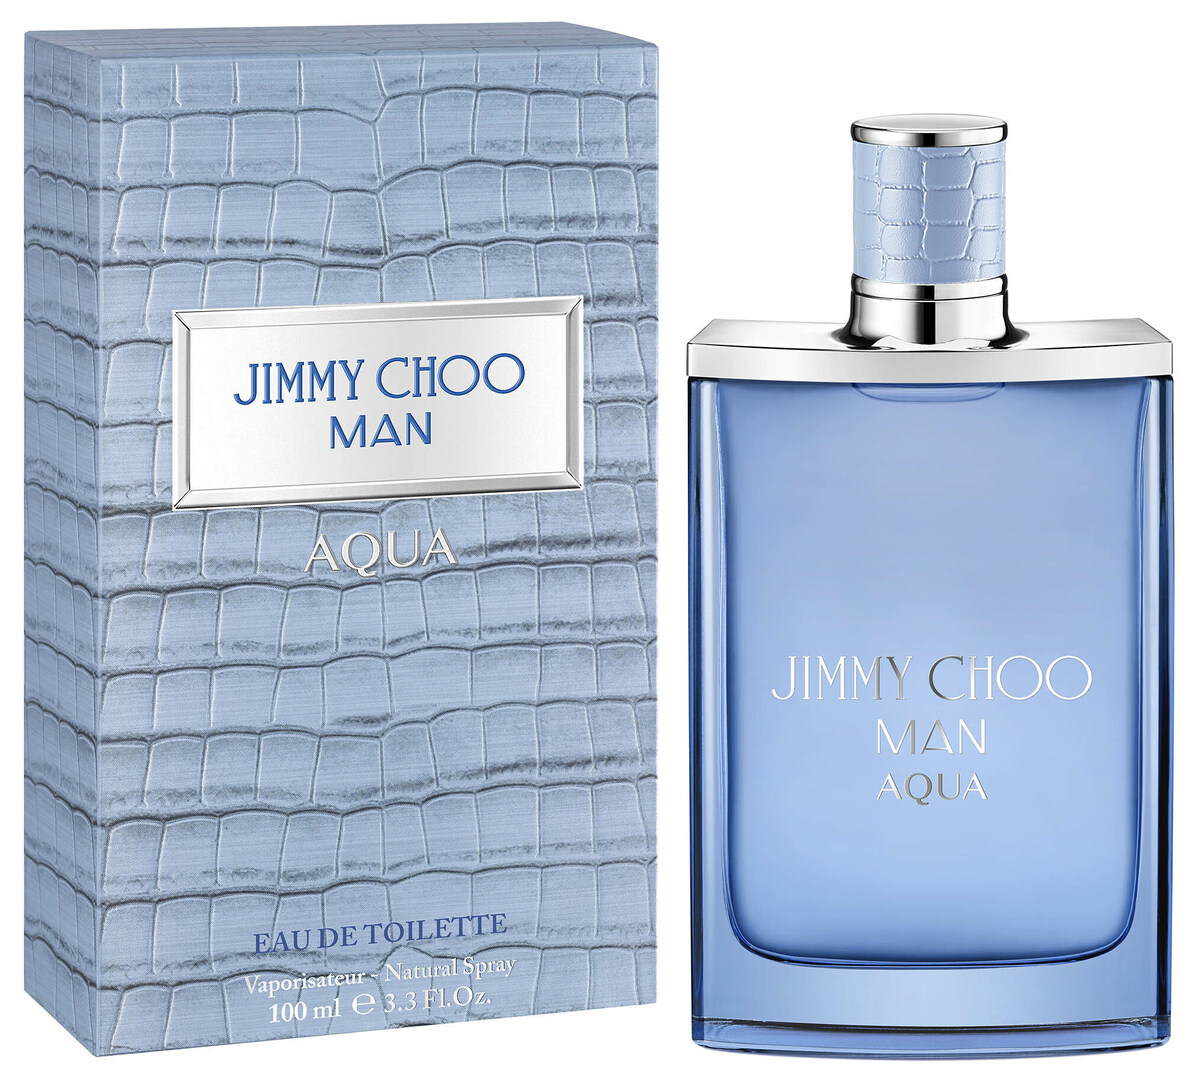 Jimmy Choo Man Blue Eau de Toilette Spray, 3.3-oz –